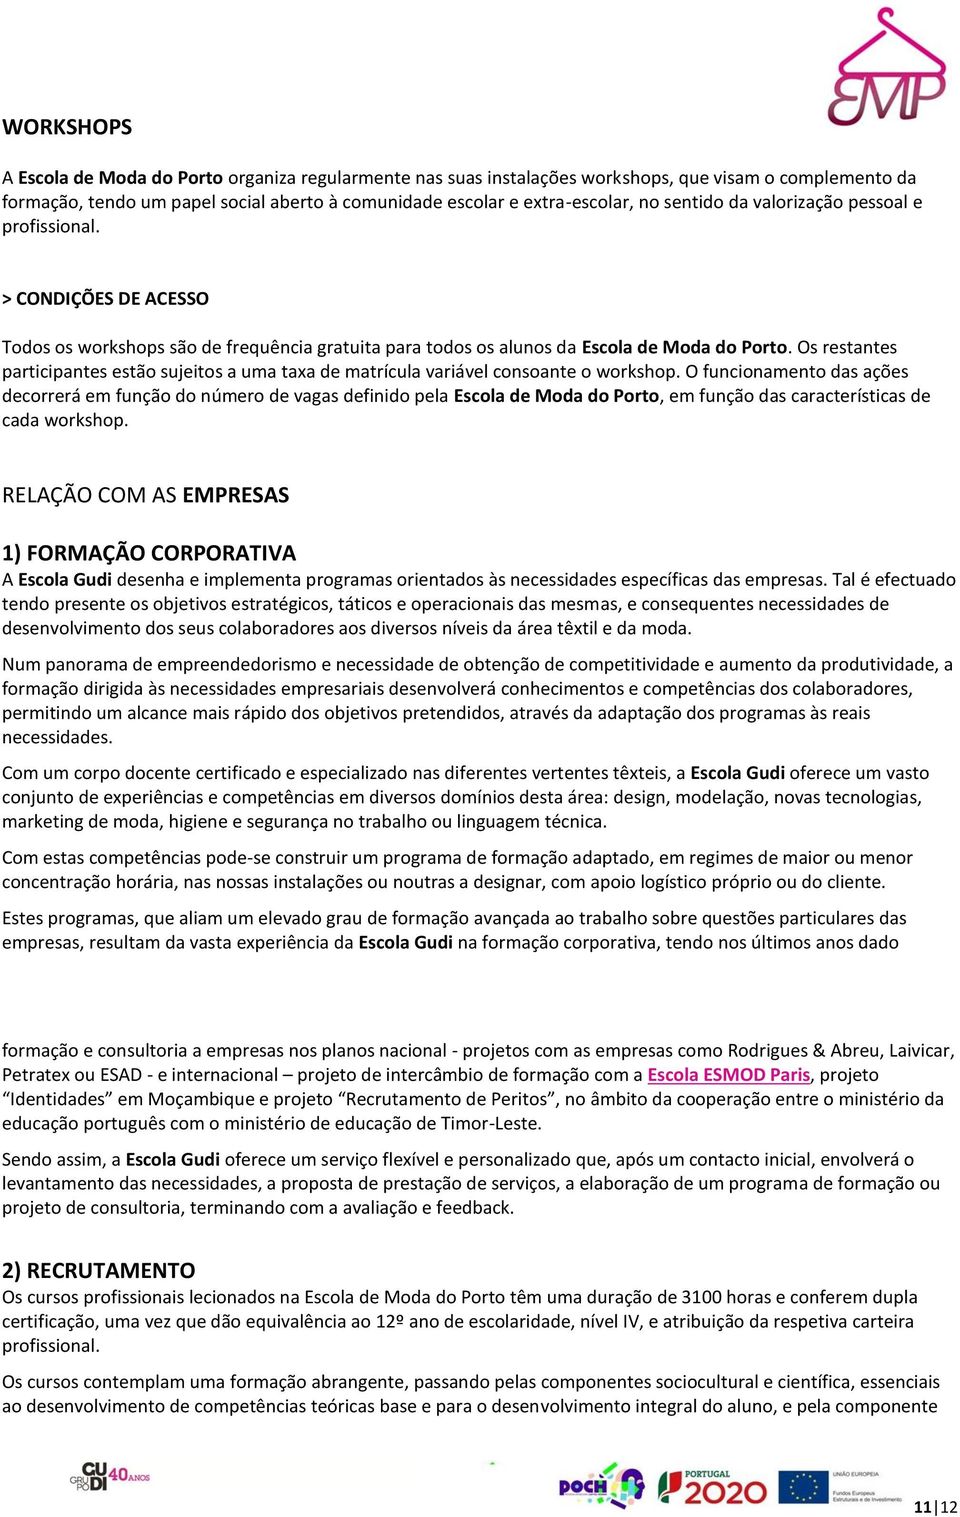 PROJETO EDUCATIVO ESCOLA DE MODA DO PORTO - PDF Free Download